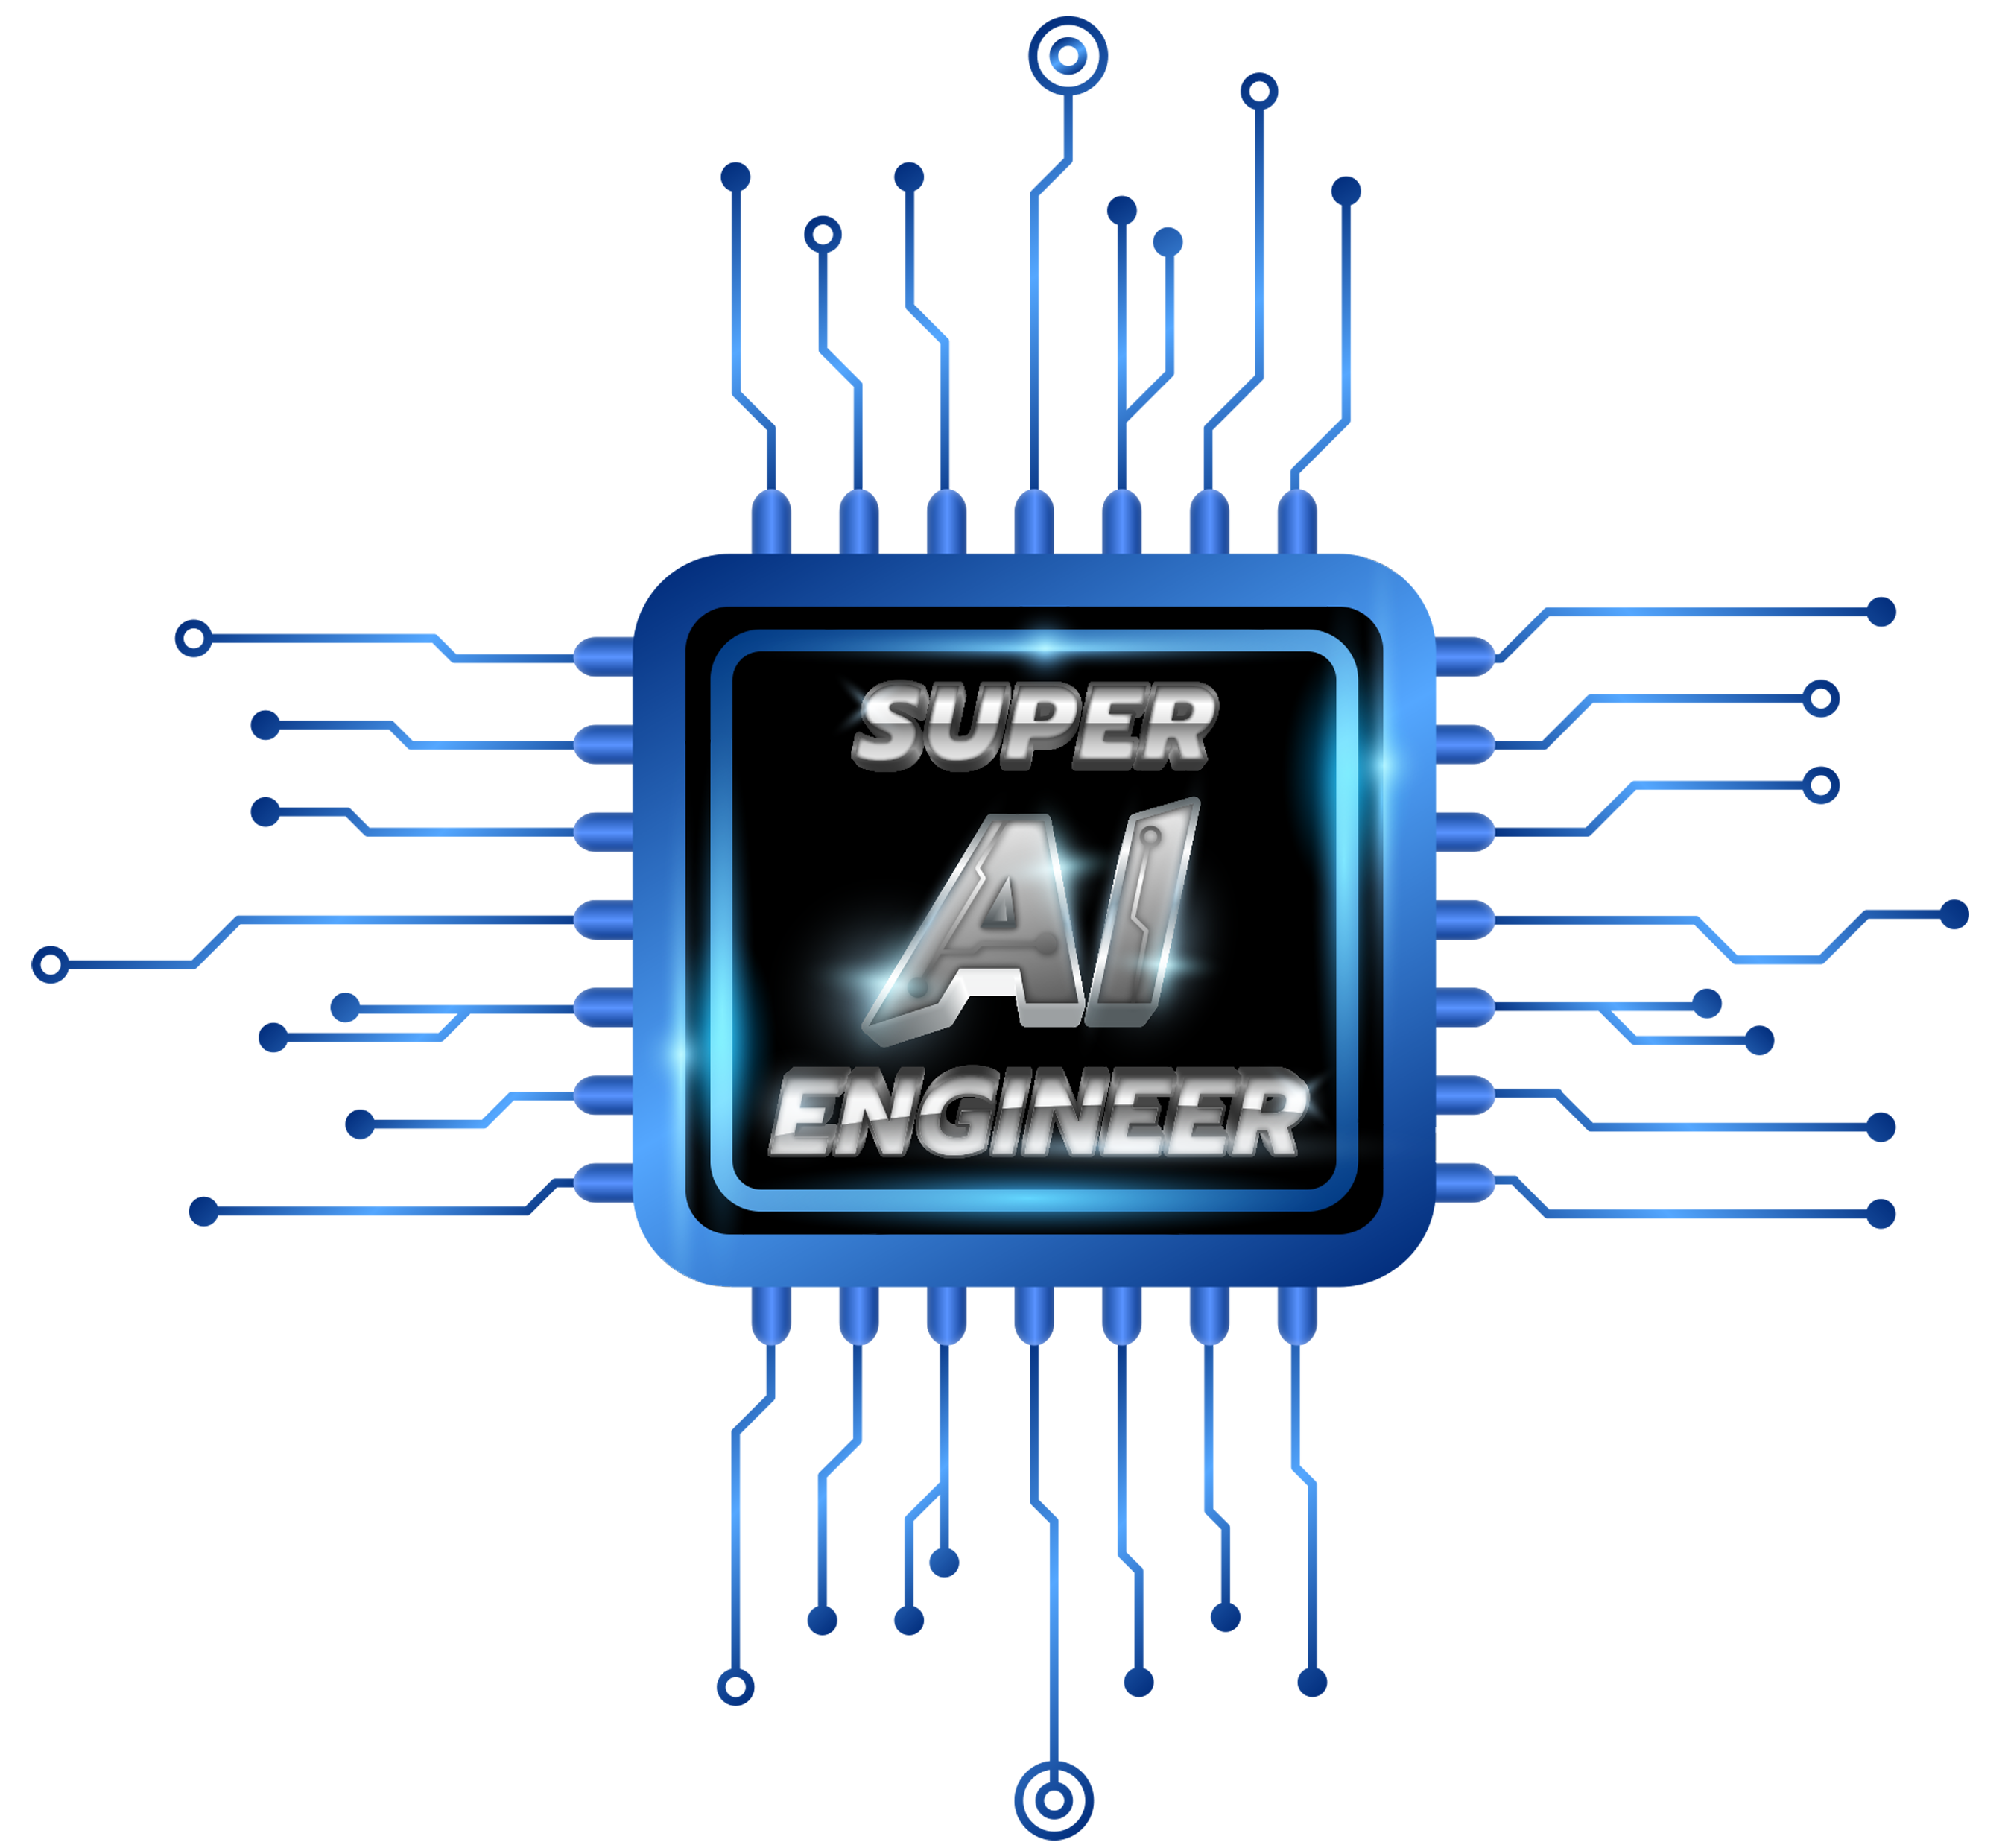 Super AI Engineer 2021